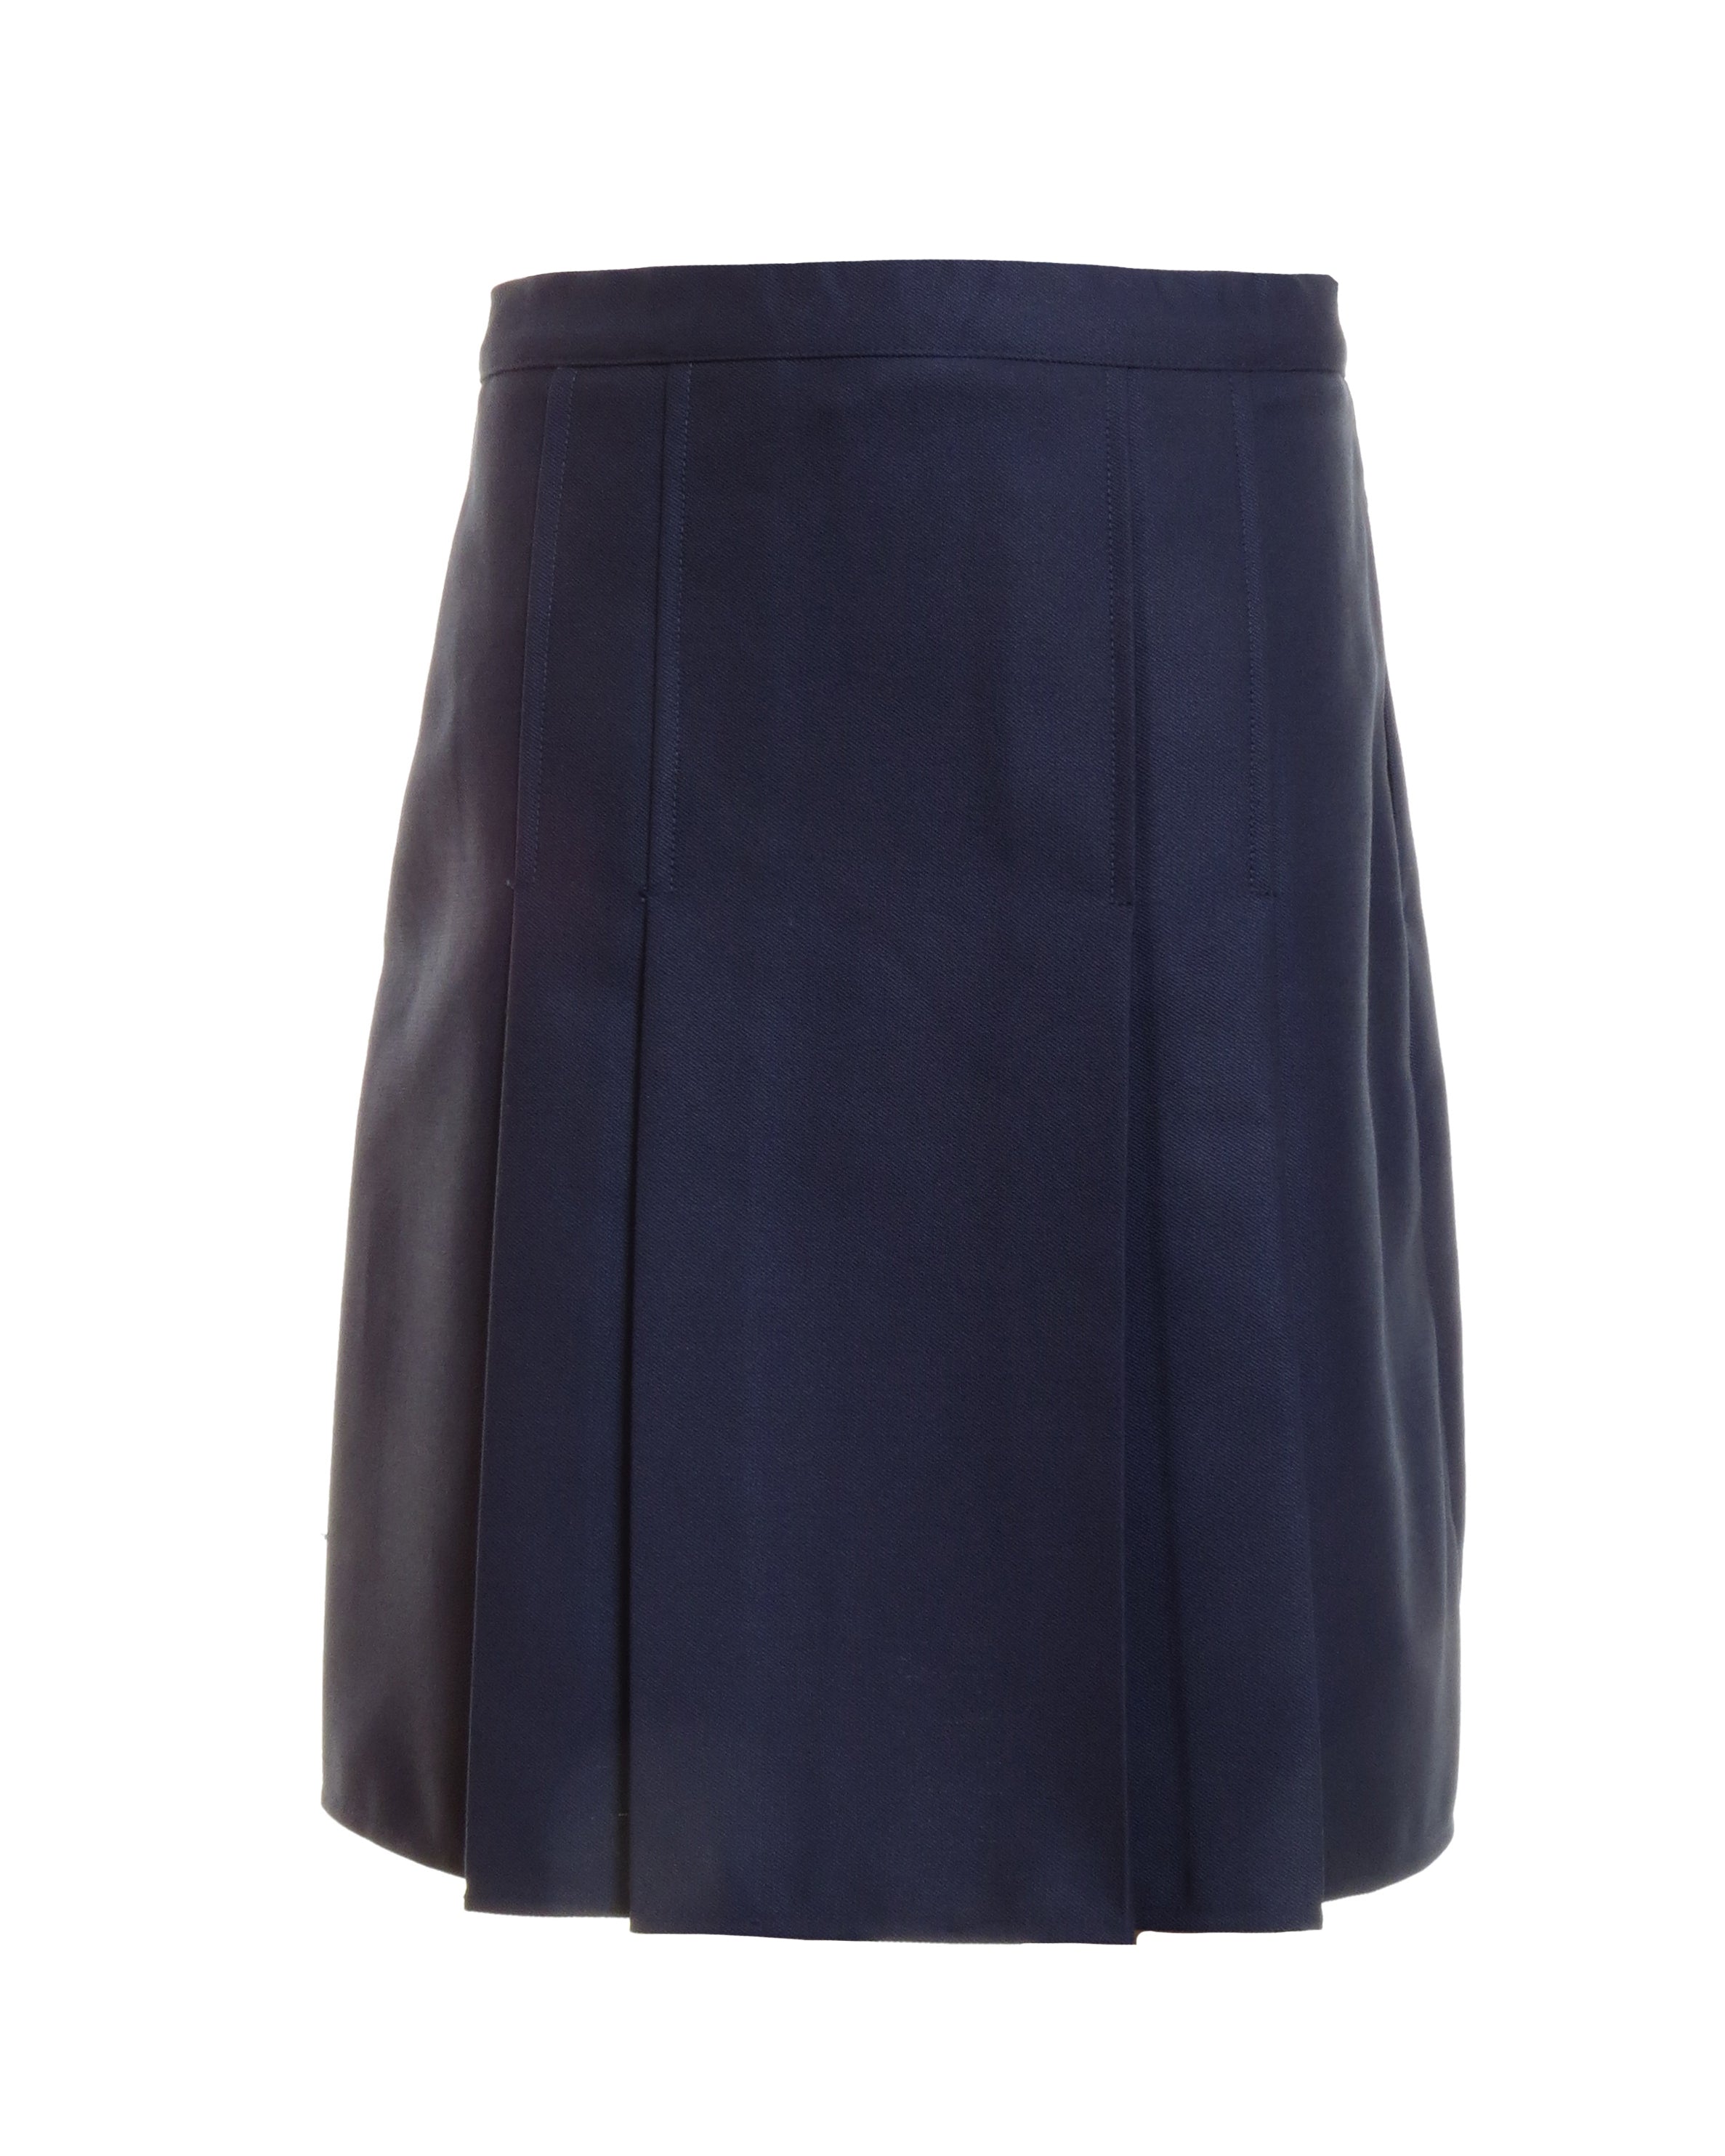 Girls School Skirt (Navy)